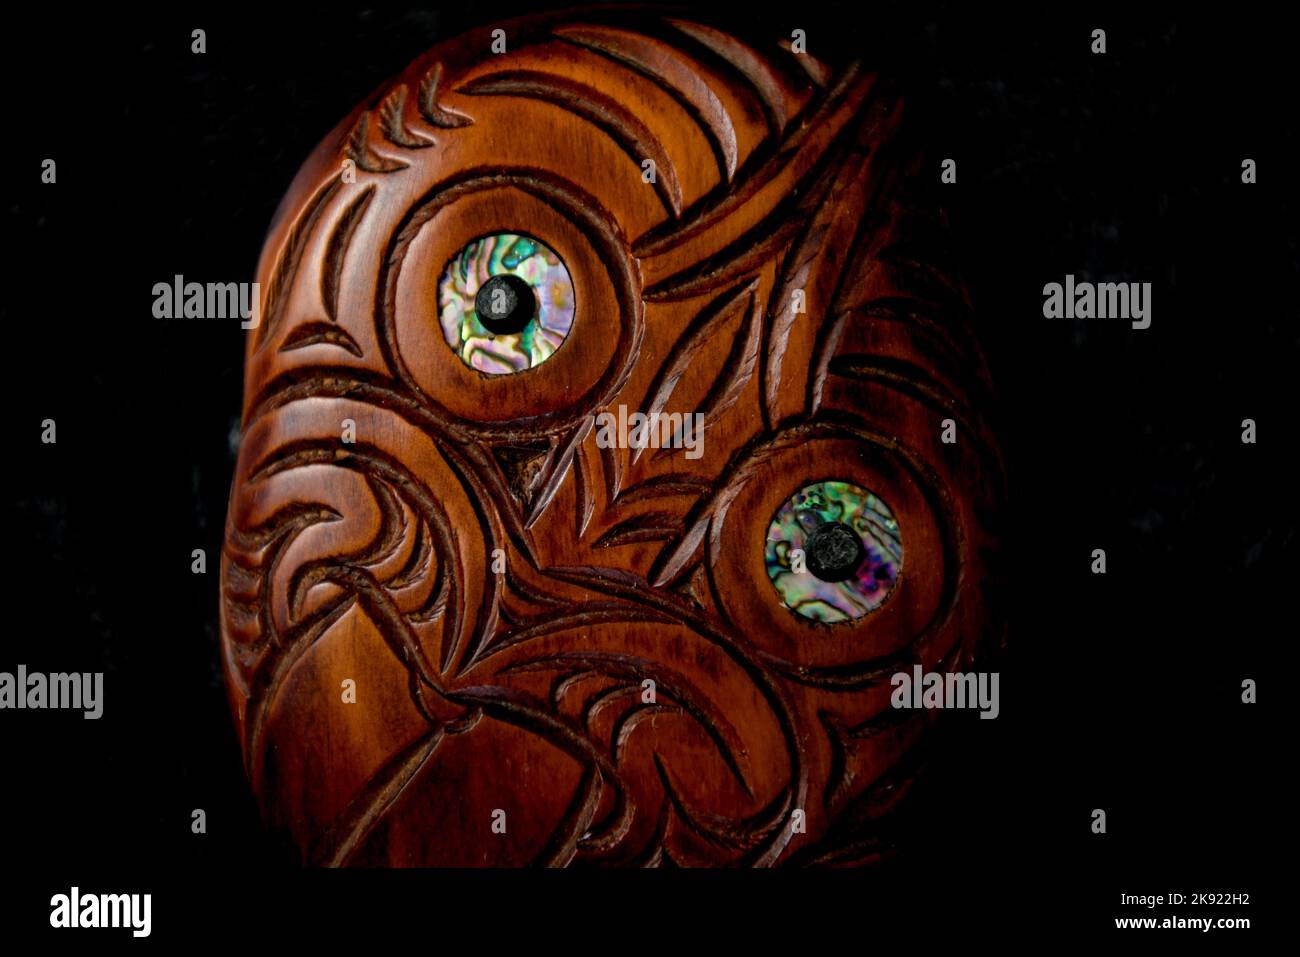 Wooden Maori Hei Tiki hand carved with paua shell eyes. New Zealand taonga. Closeup dark background. Stock Photo